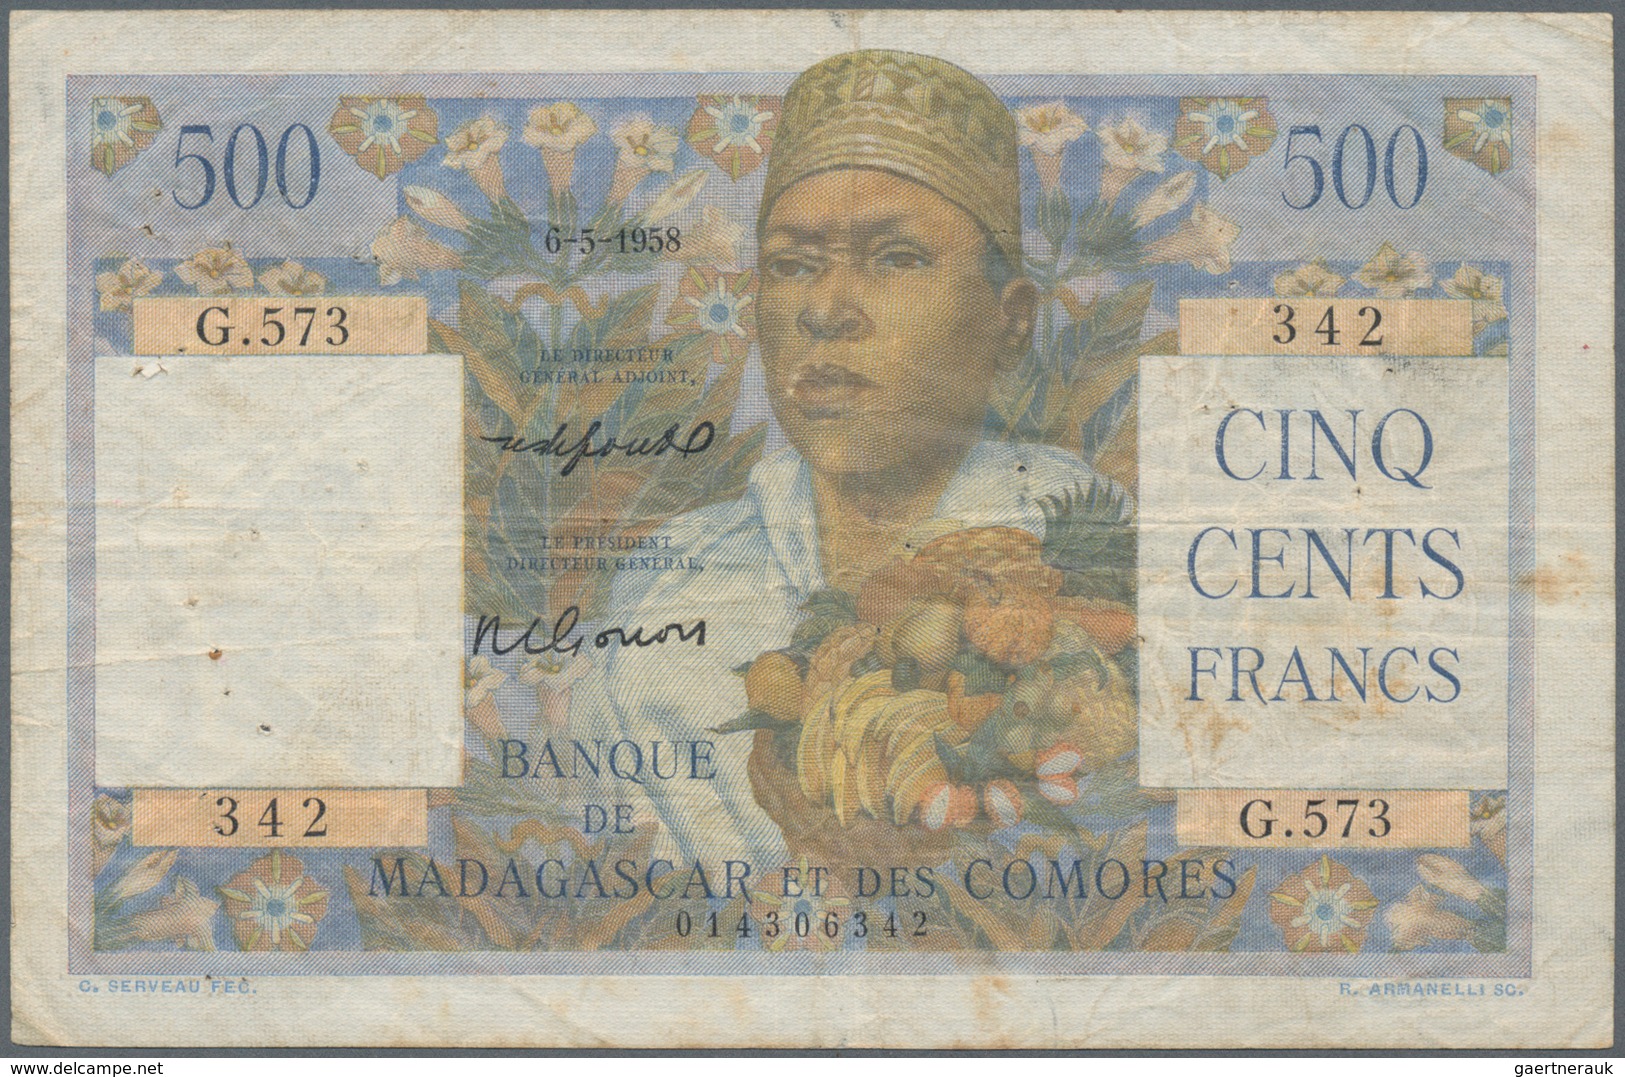 Madagascar: Banque De Madagascar Et Des Comores 500 Francs 1958, P.47, Great And Rare Note In Still - Madagascar